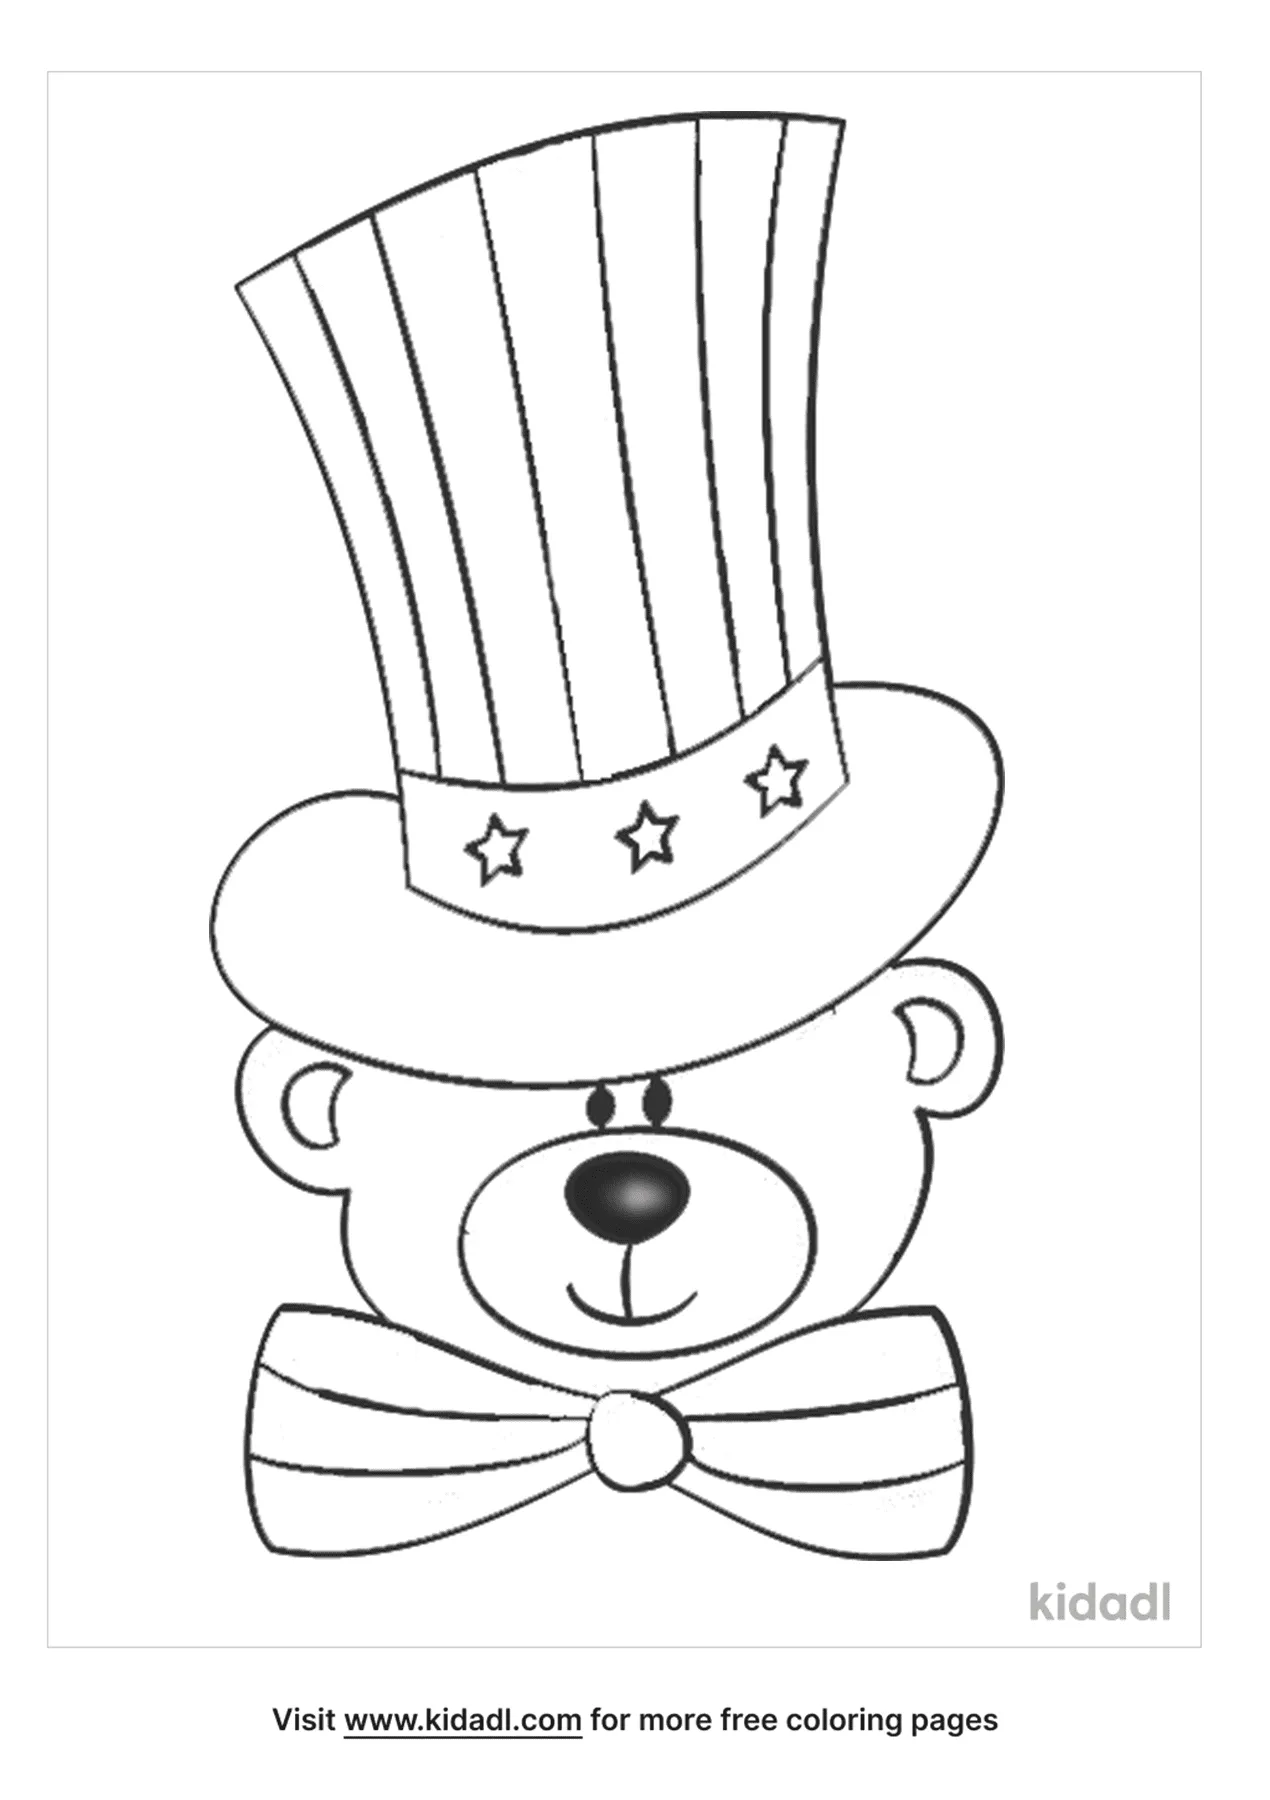 Free patriotic teddy bear coloring page coloring page printables